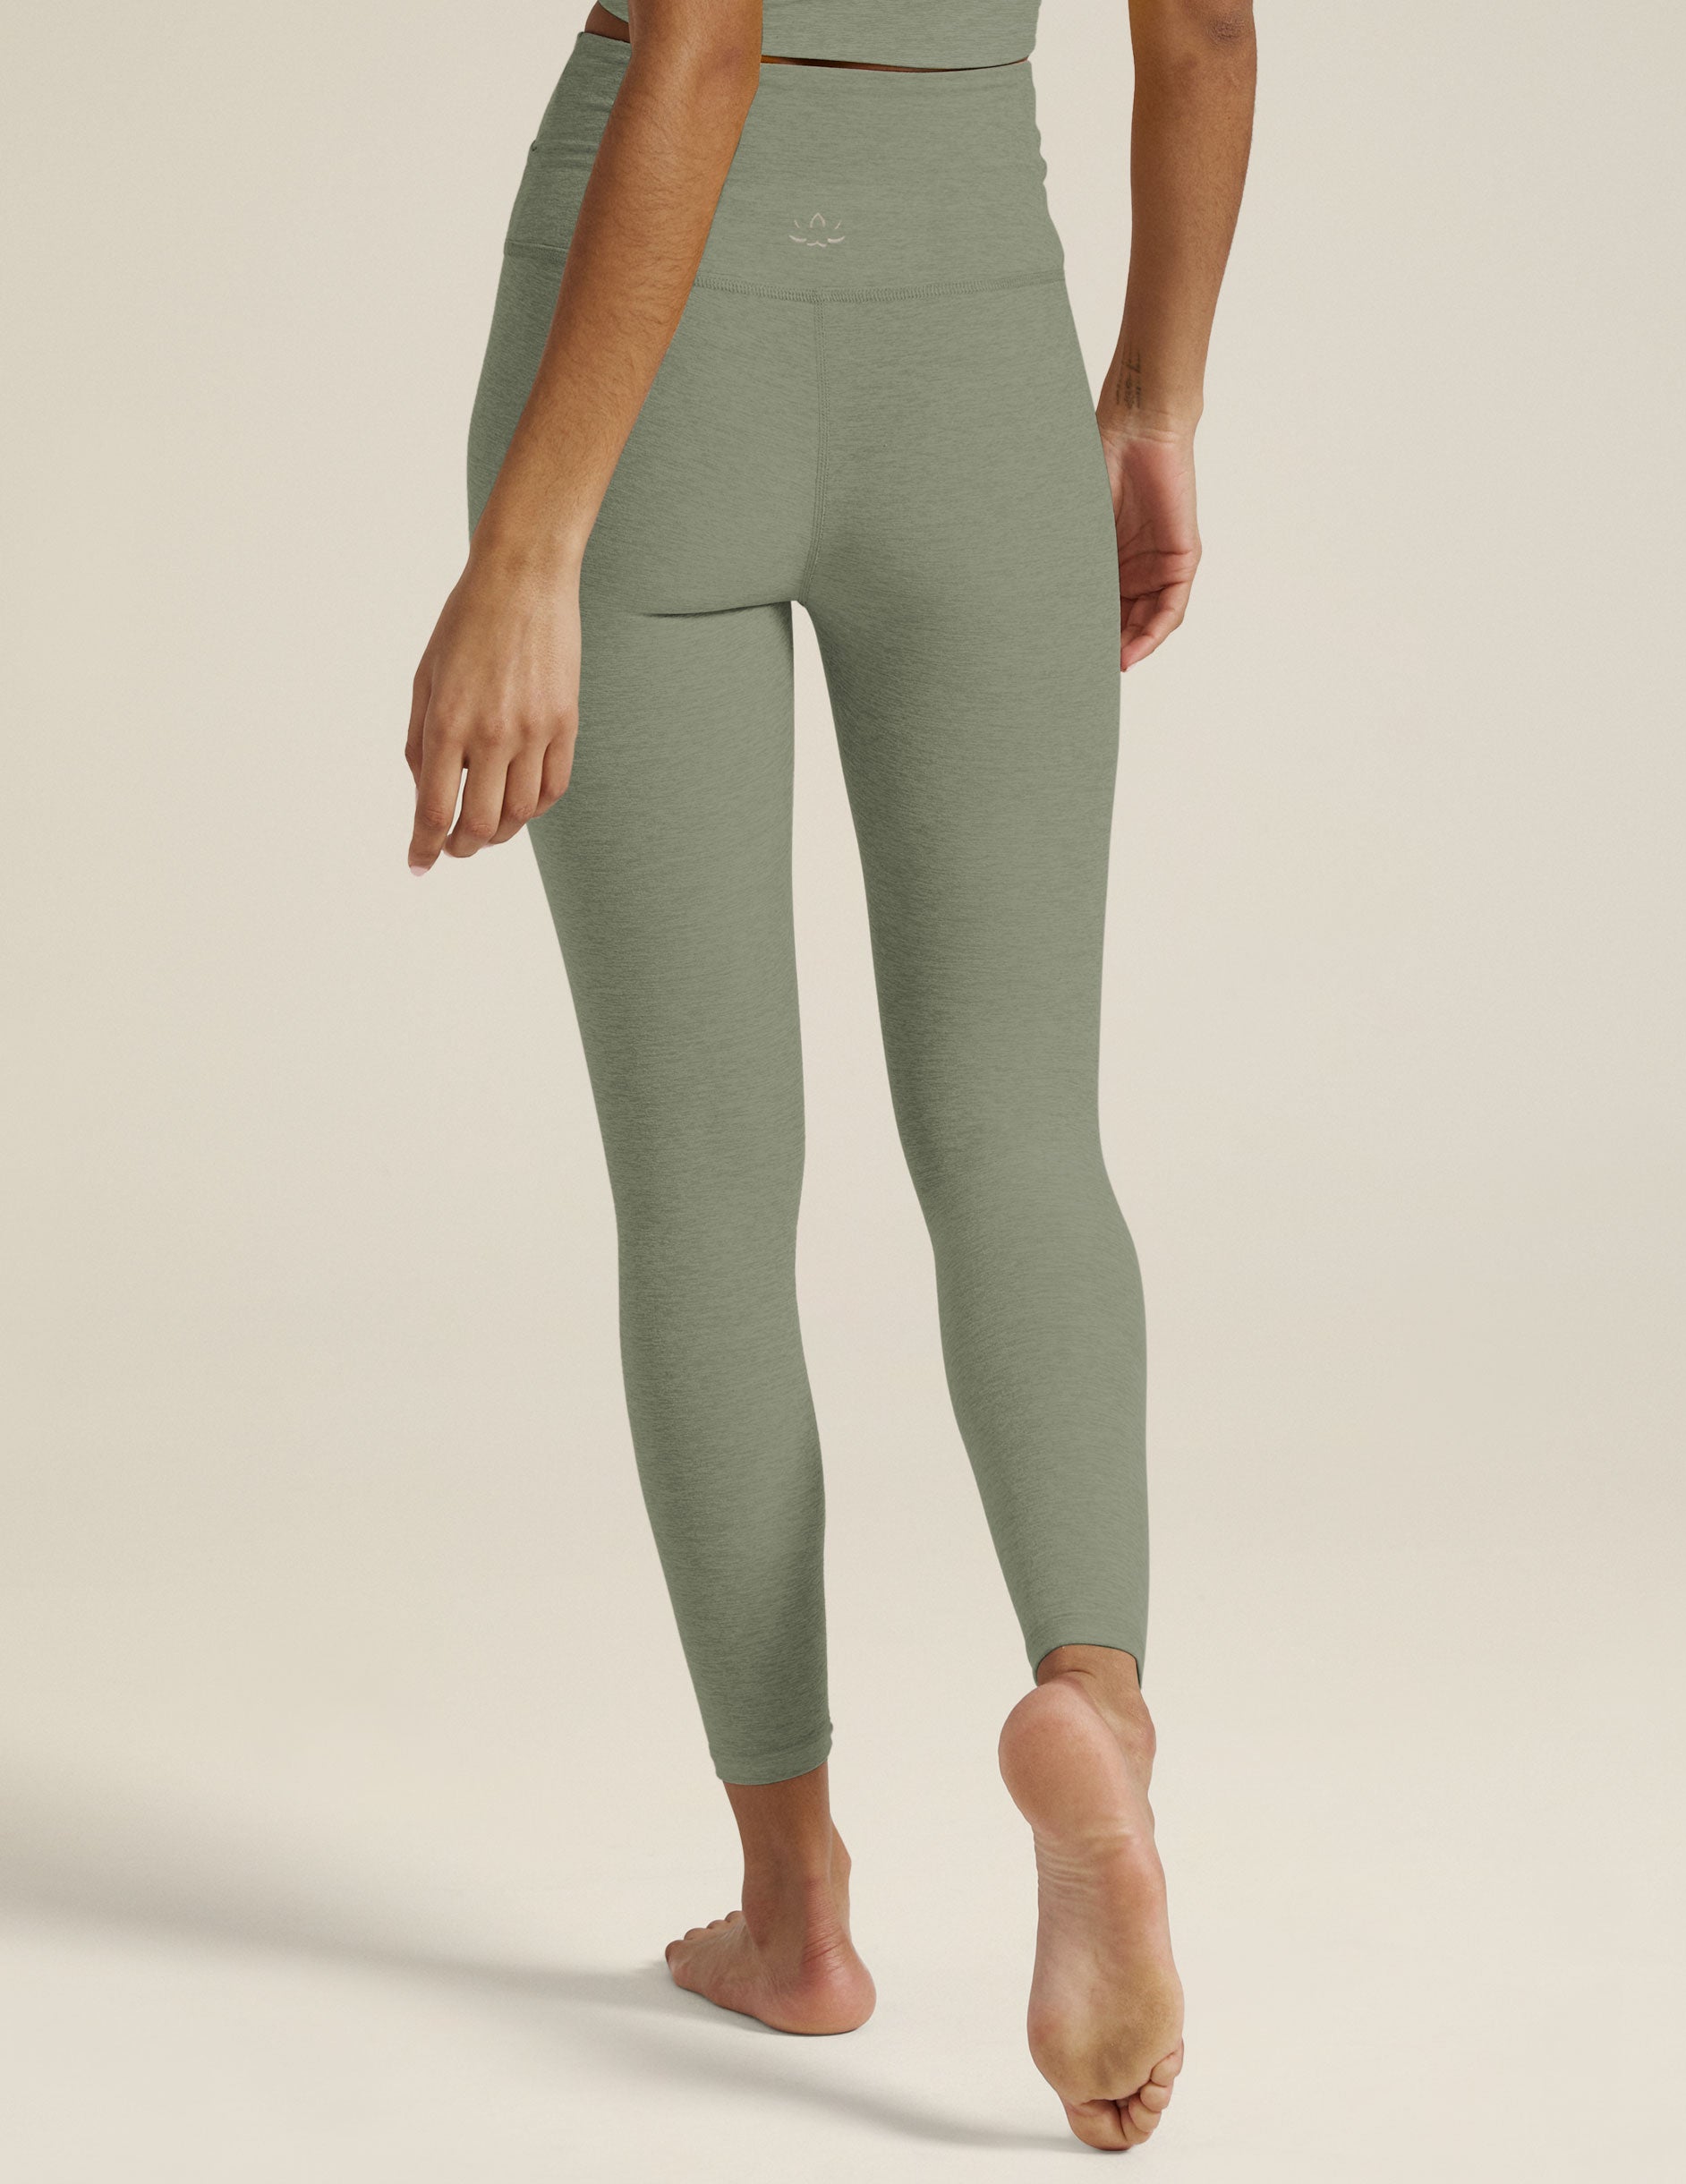 Terez Beyond Yoga Womens Leggings Multi Colored Green Size Medium Smal -  Shop Linda's Stuff